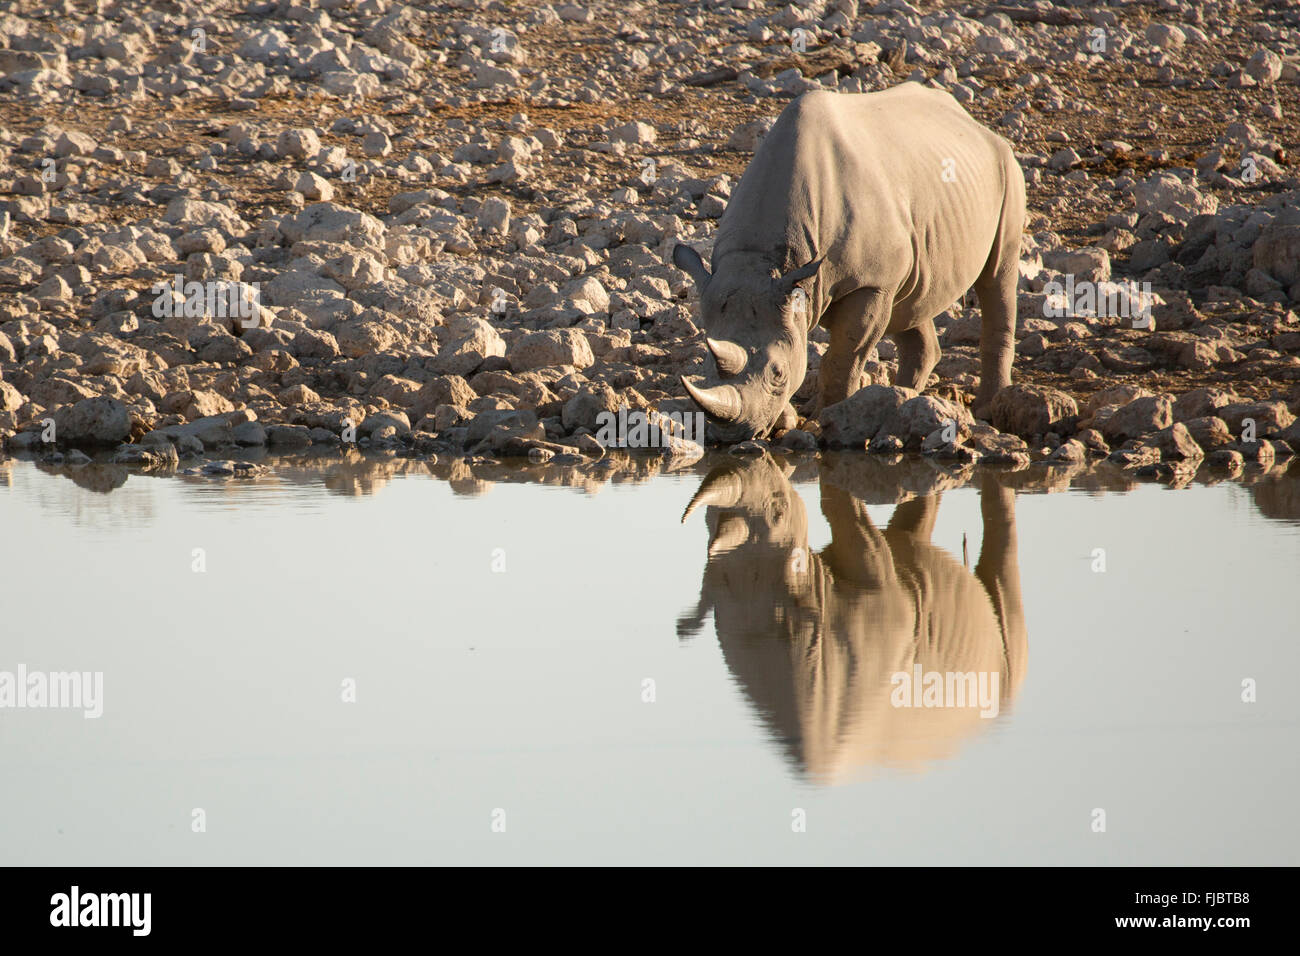 A Black Rhino drinks water Stock Photo